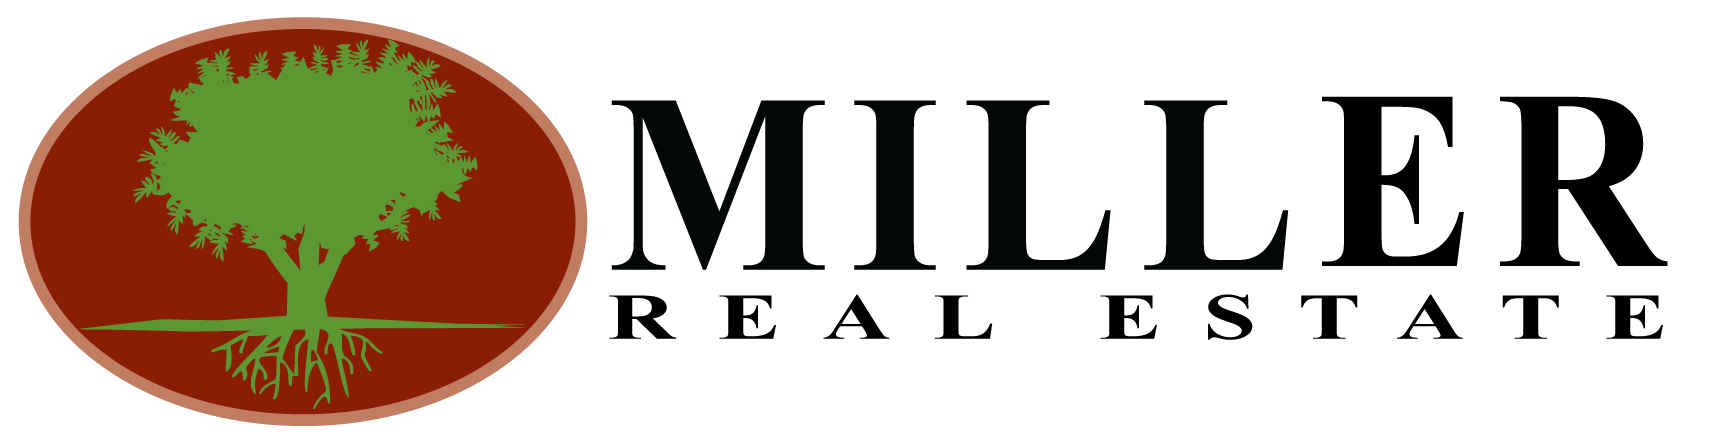 Miller Real Estate | Sacramento, Placer and Yolo County Real Estate